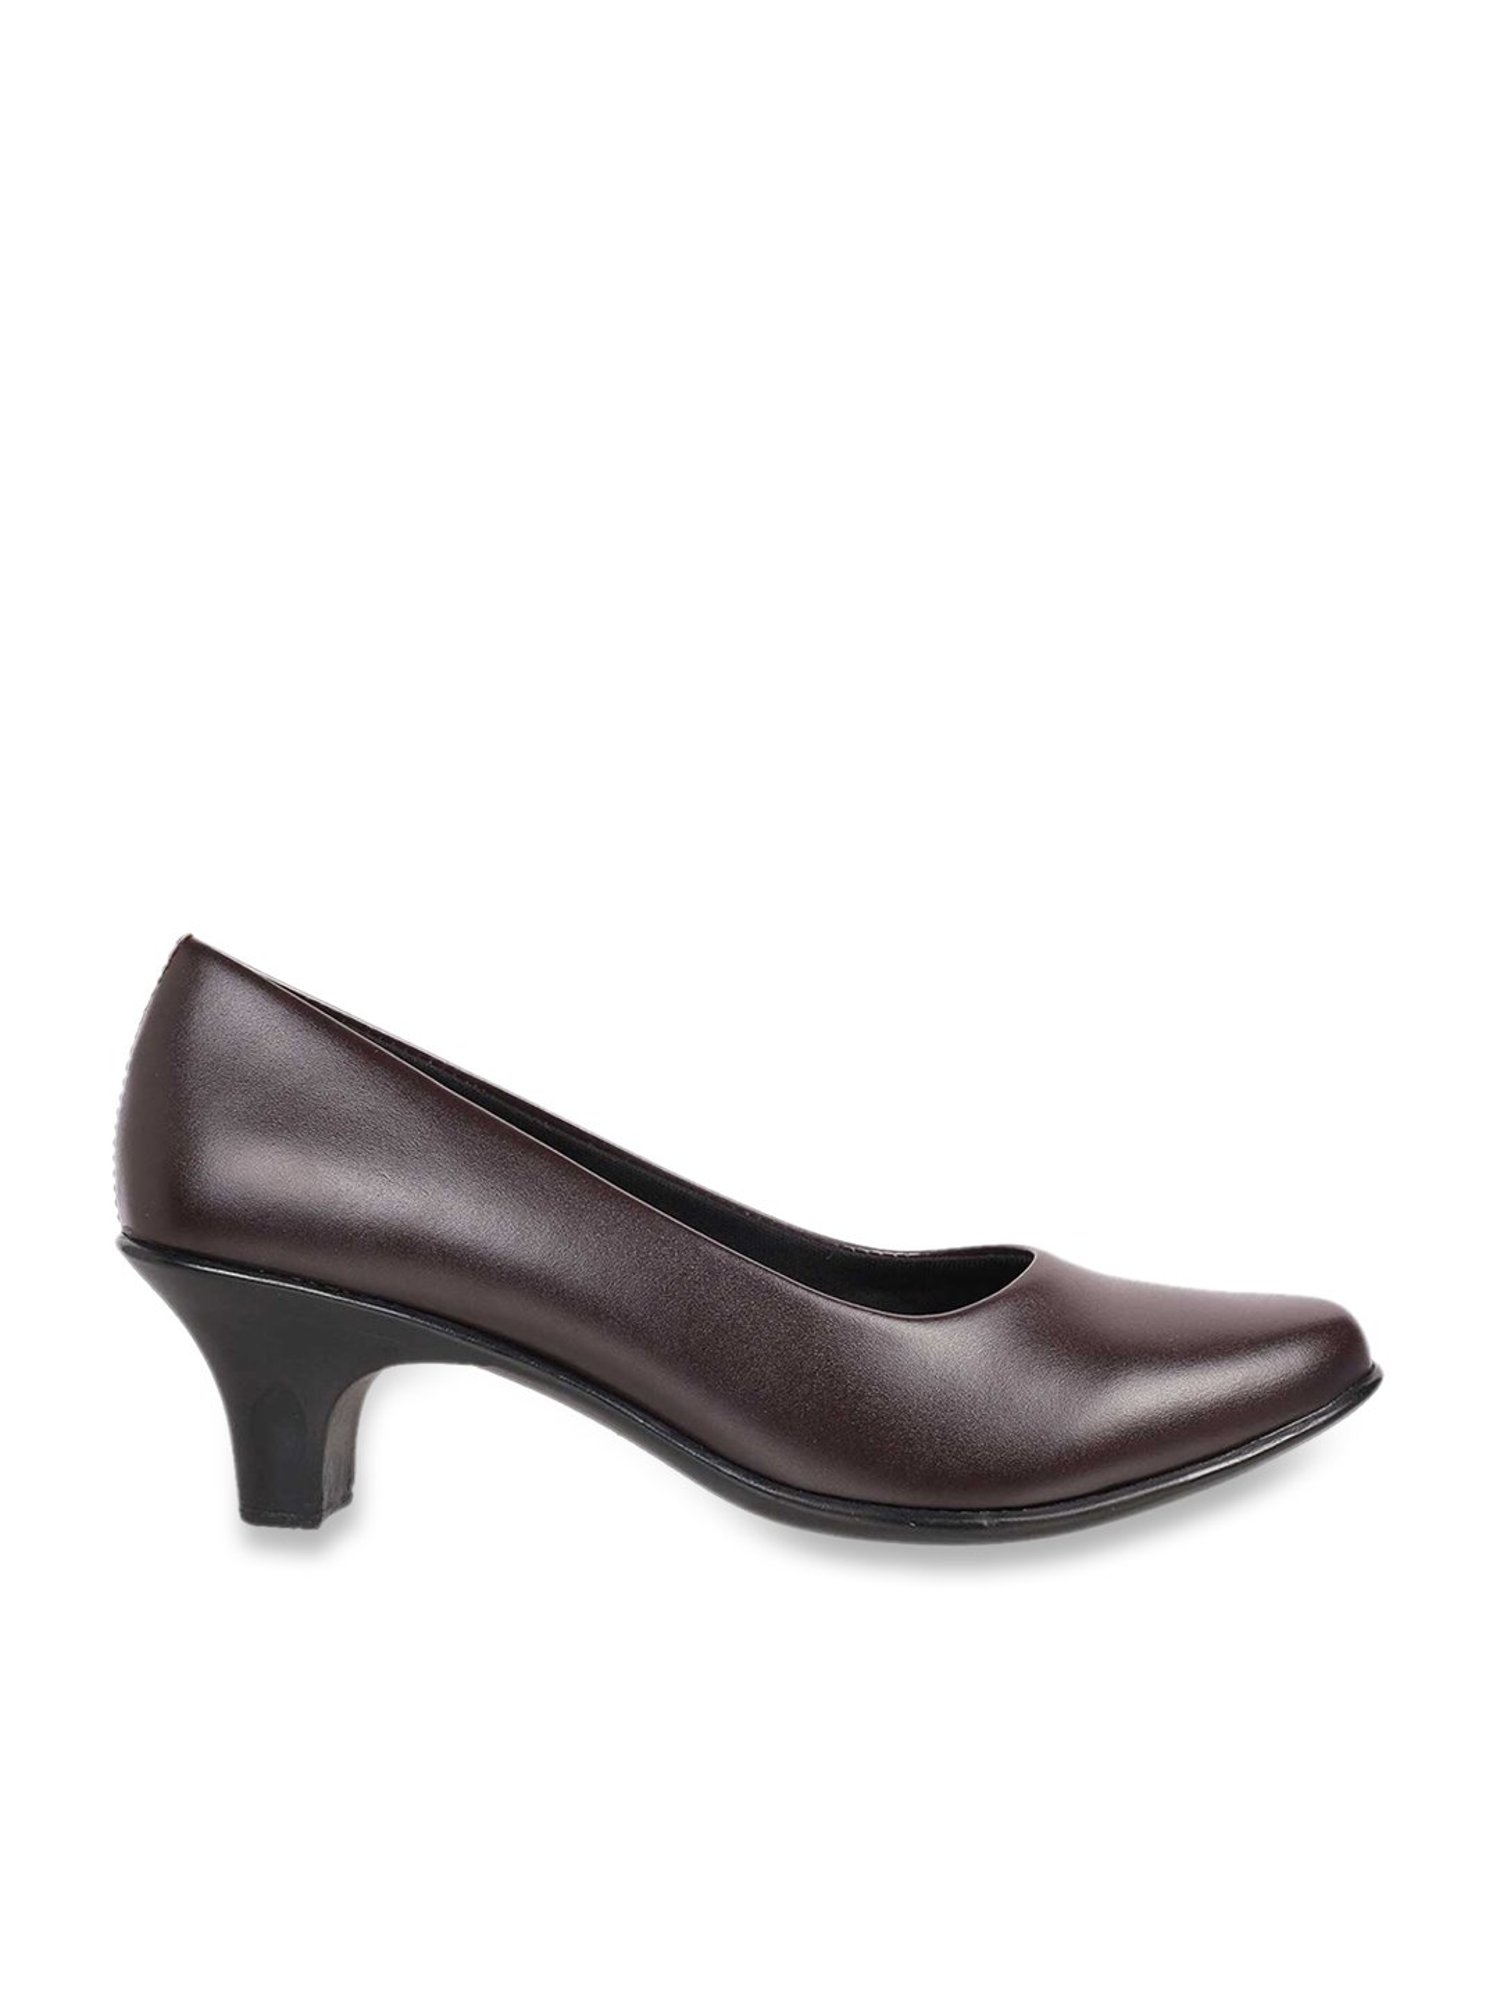 NIB Nina CHARM Black Mesh w/Bow Sparkly Glam Heels Formal Shoes Women's  Size 7.5 | eBay